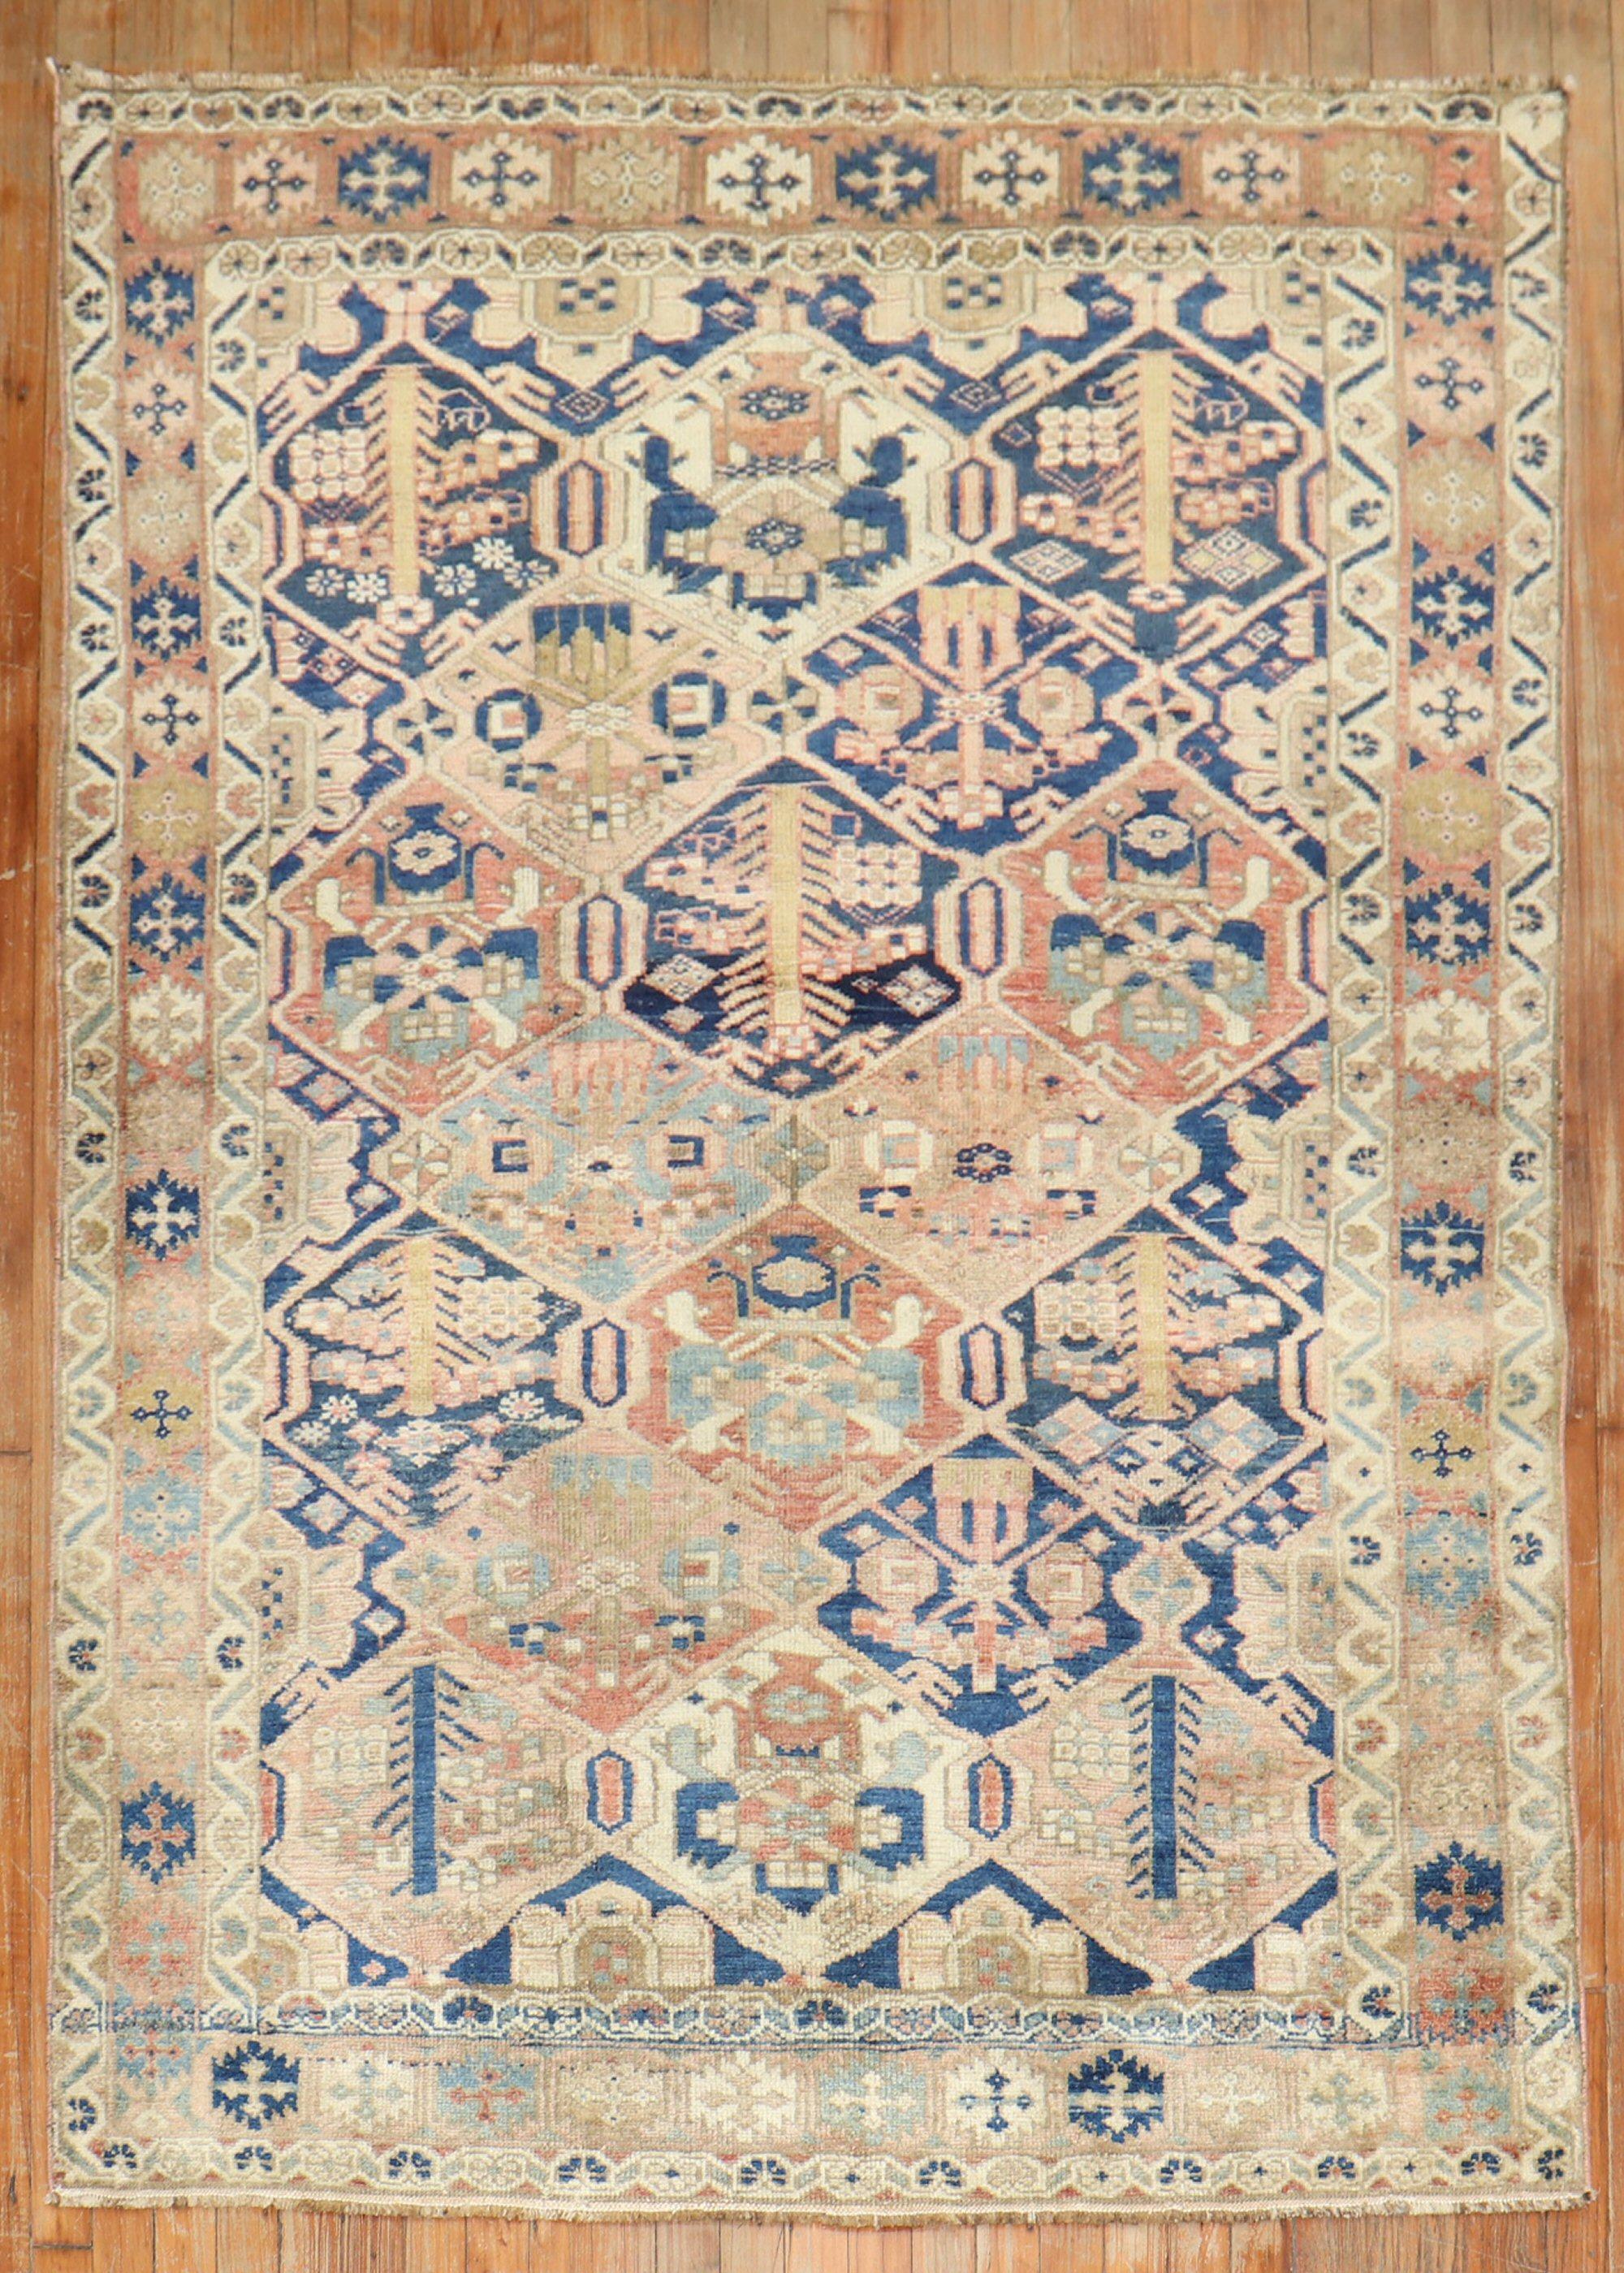 A traditional rustic color Persian Bakhtiari accent size rug,

circa 1940. Measures: 4'7